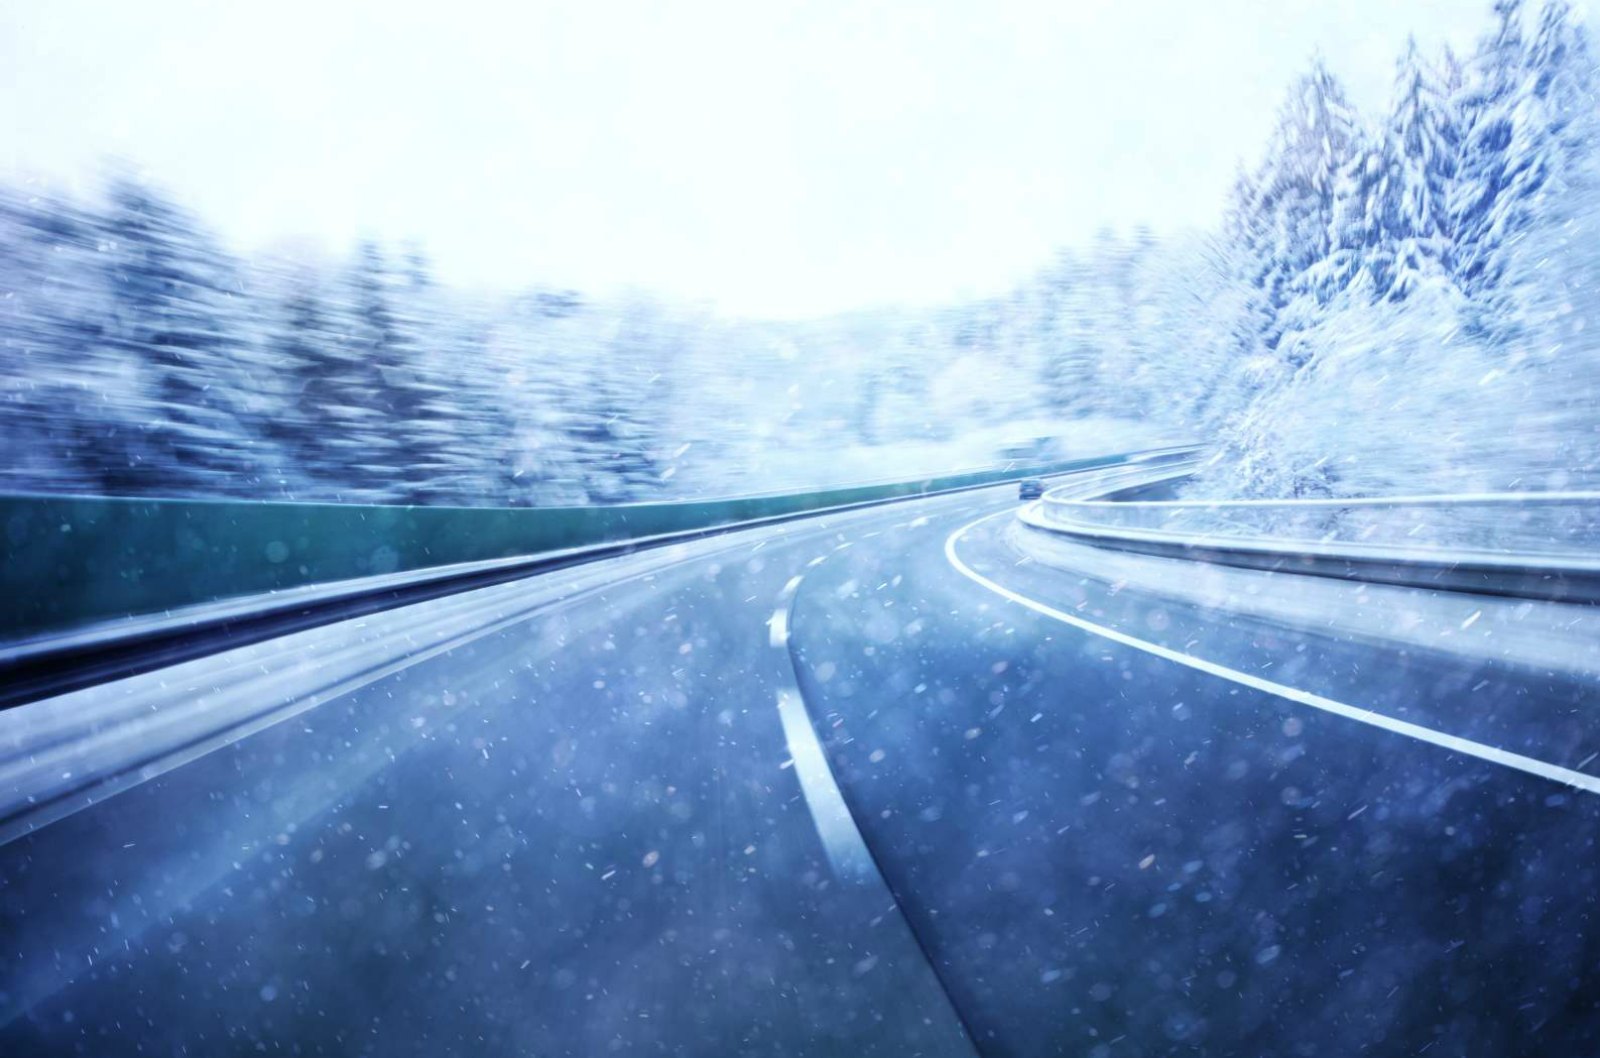 SafeLane Surface Overlay Improves Winter Road Safety